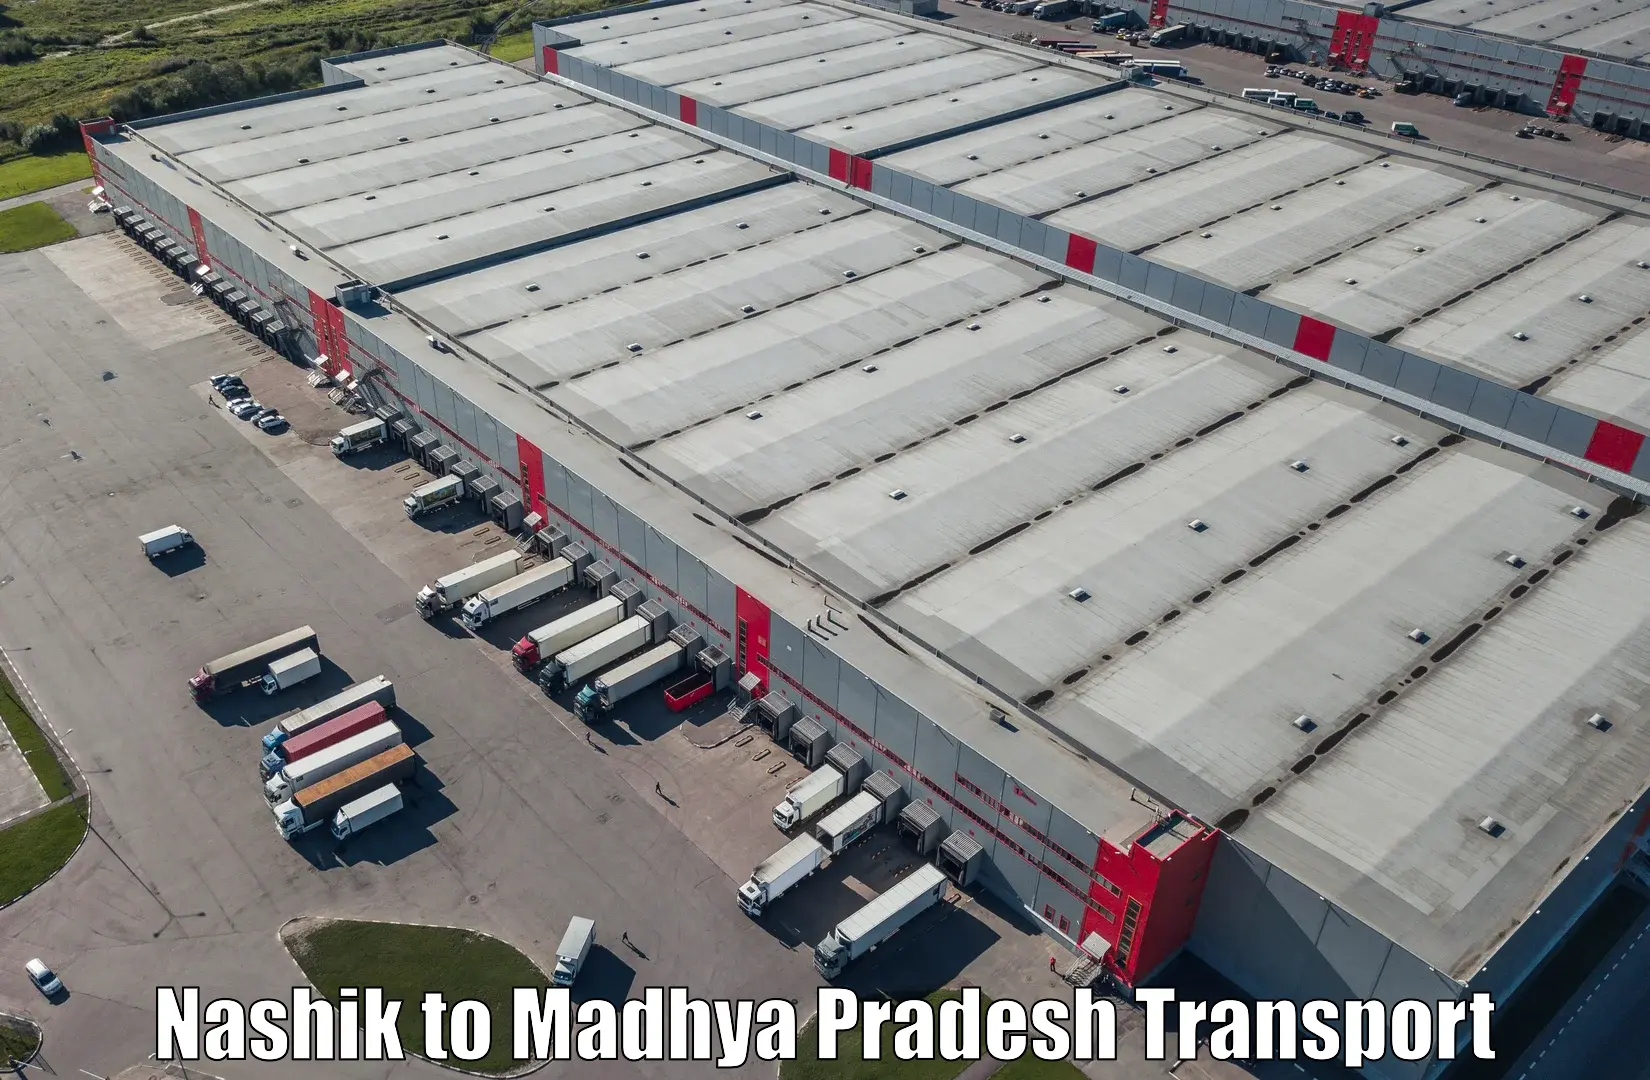 Truck transport companies in India Nashik to Rahatgarh